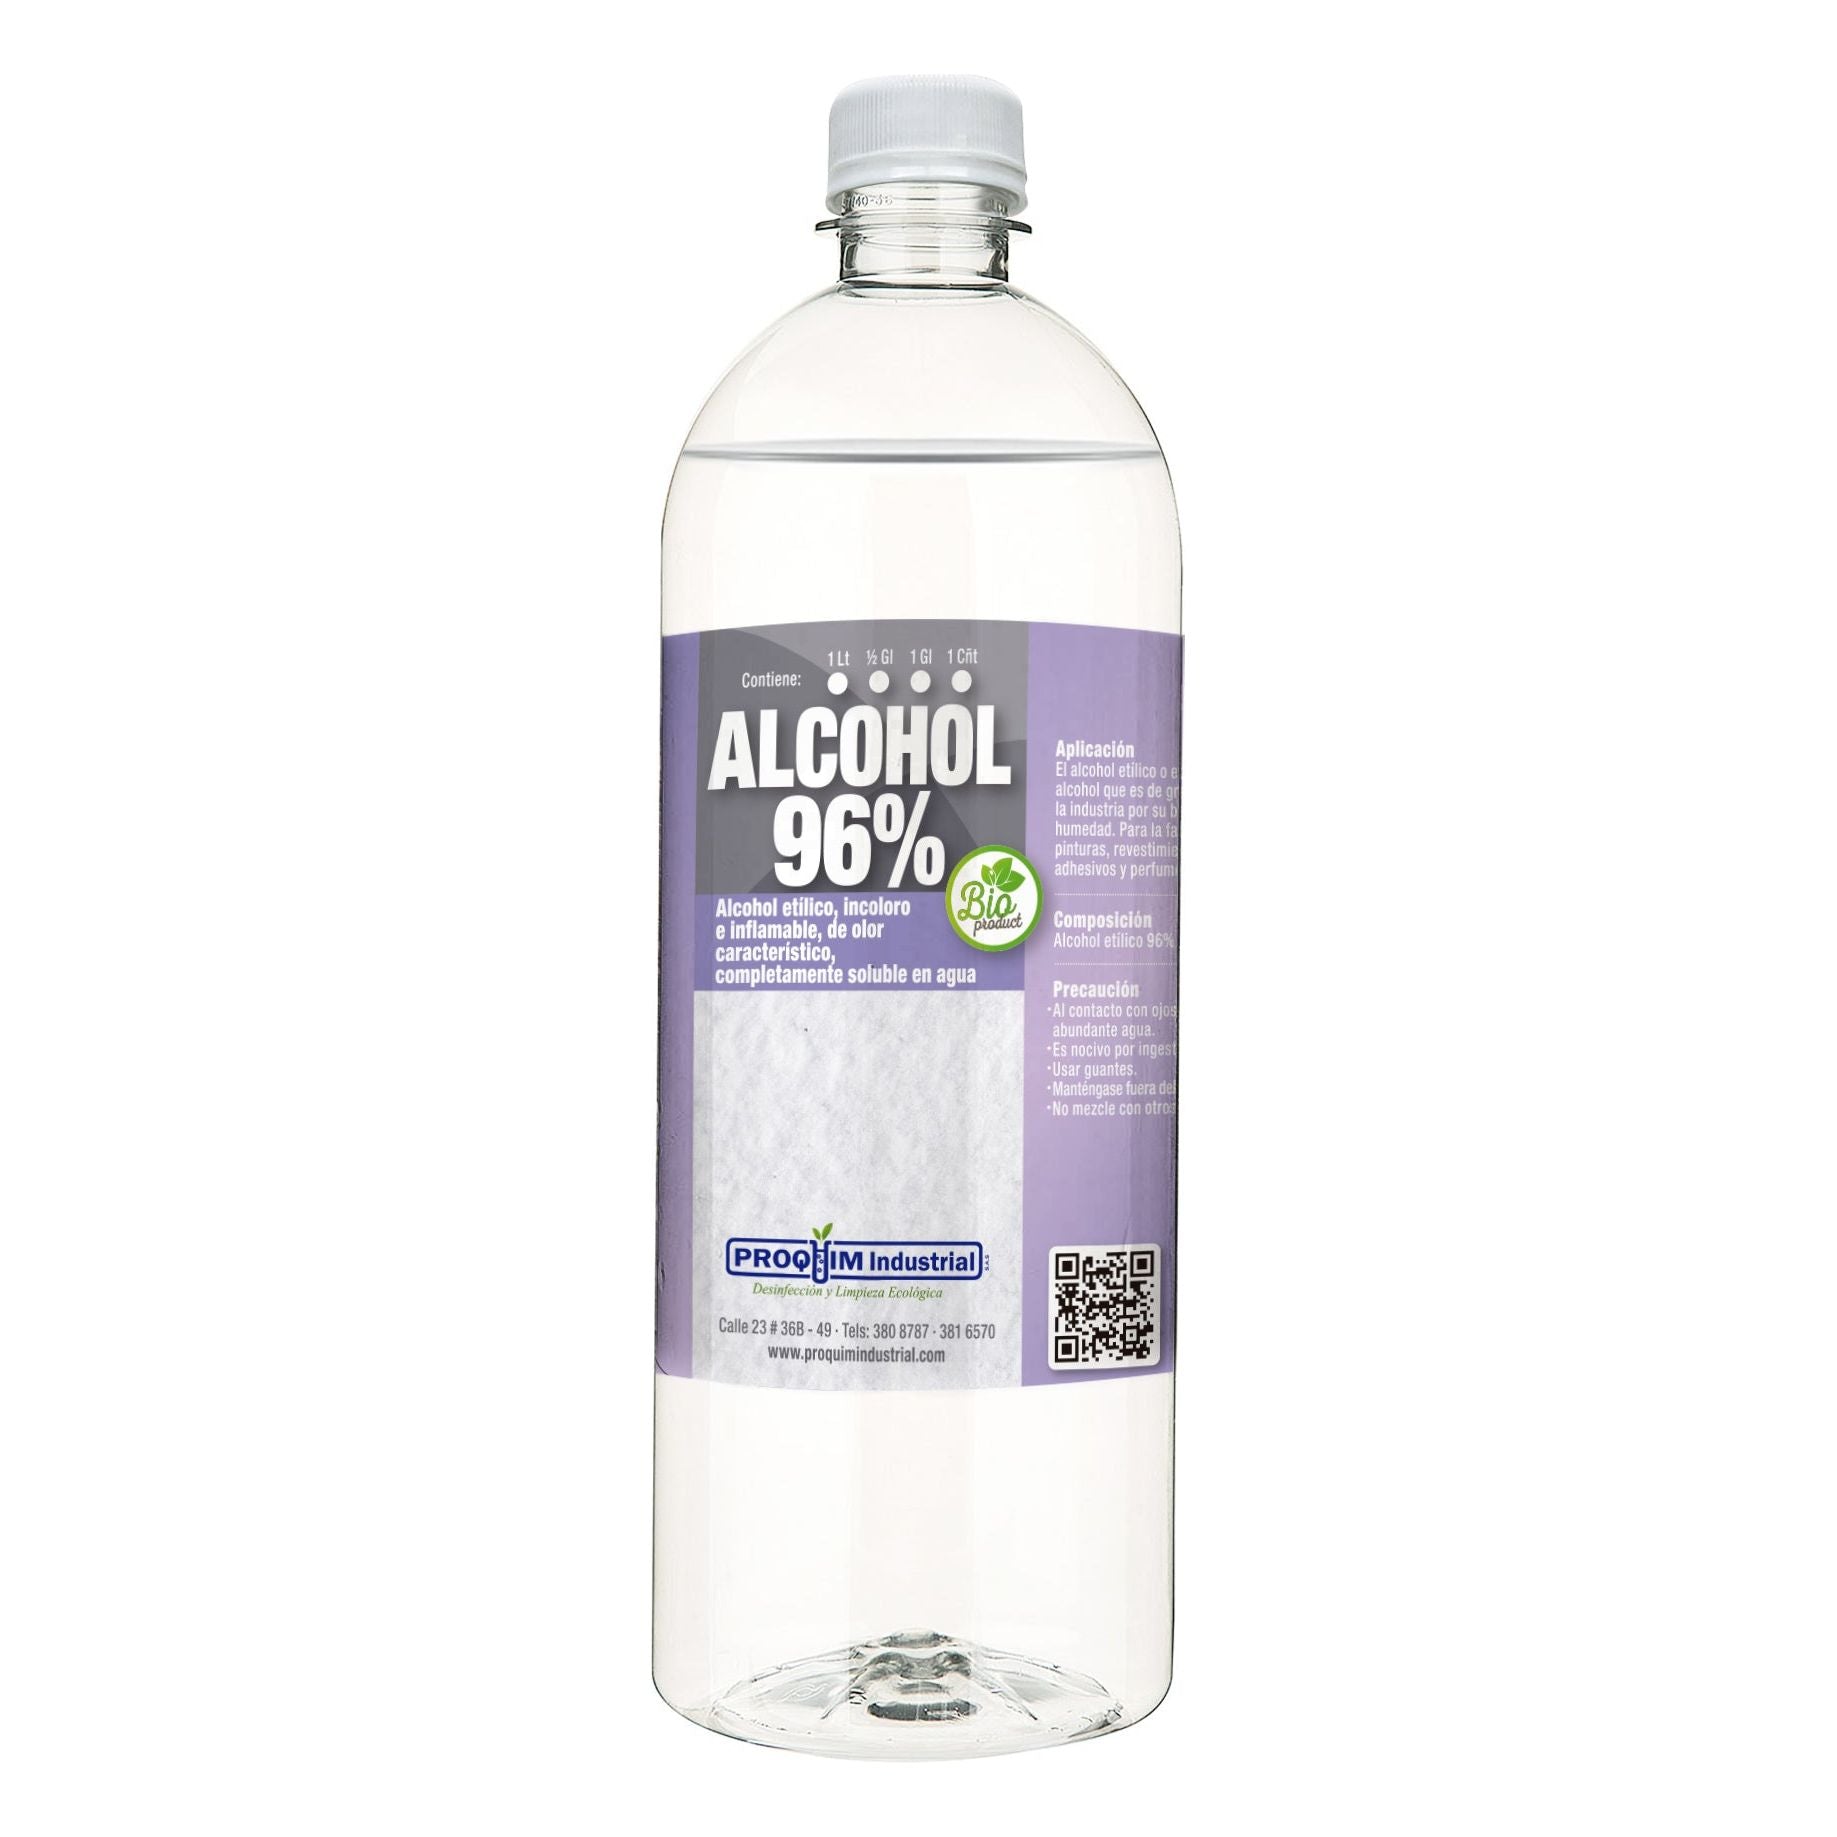 alcohol de limpieza perfumado 96% alcohol